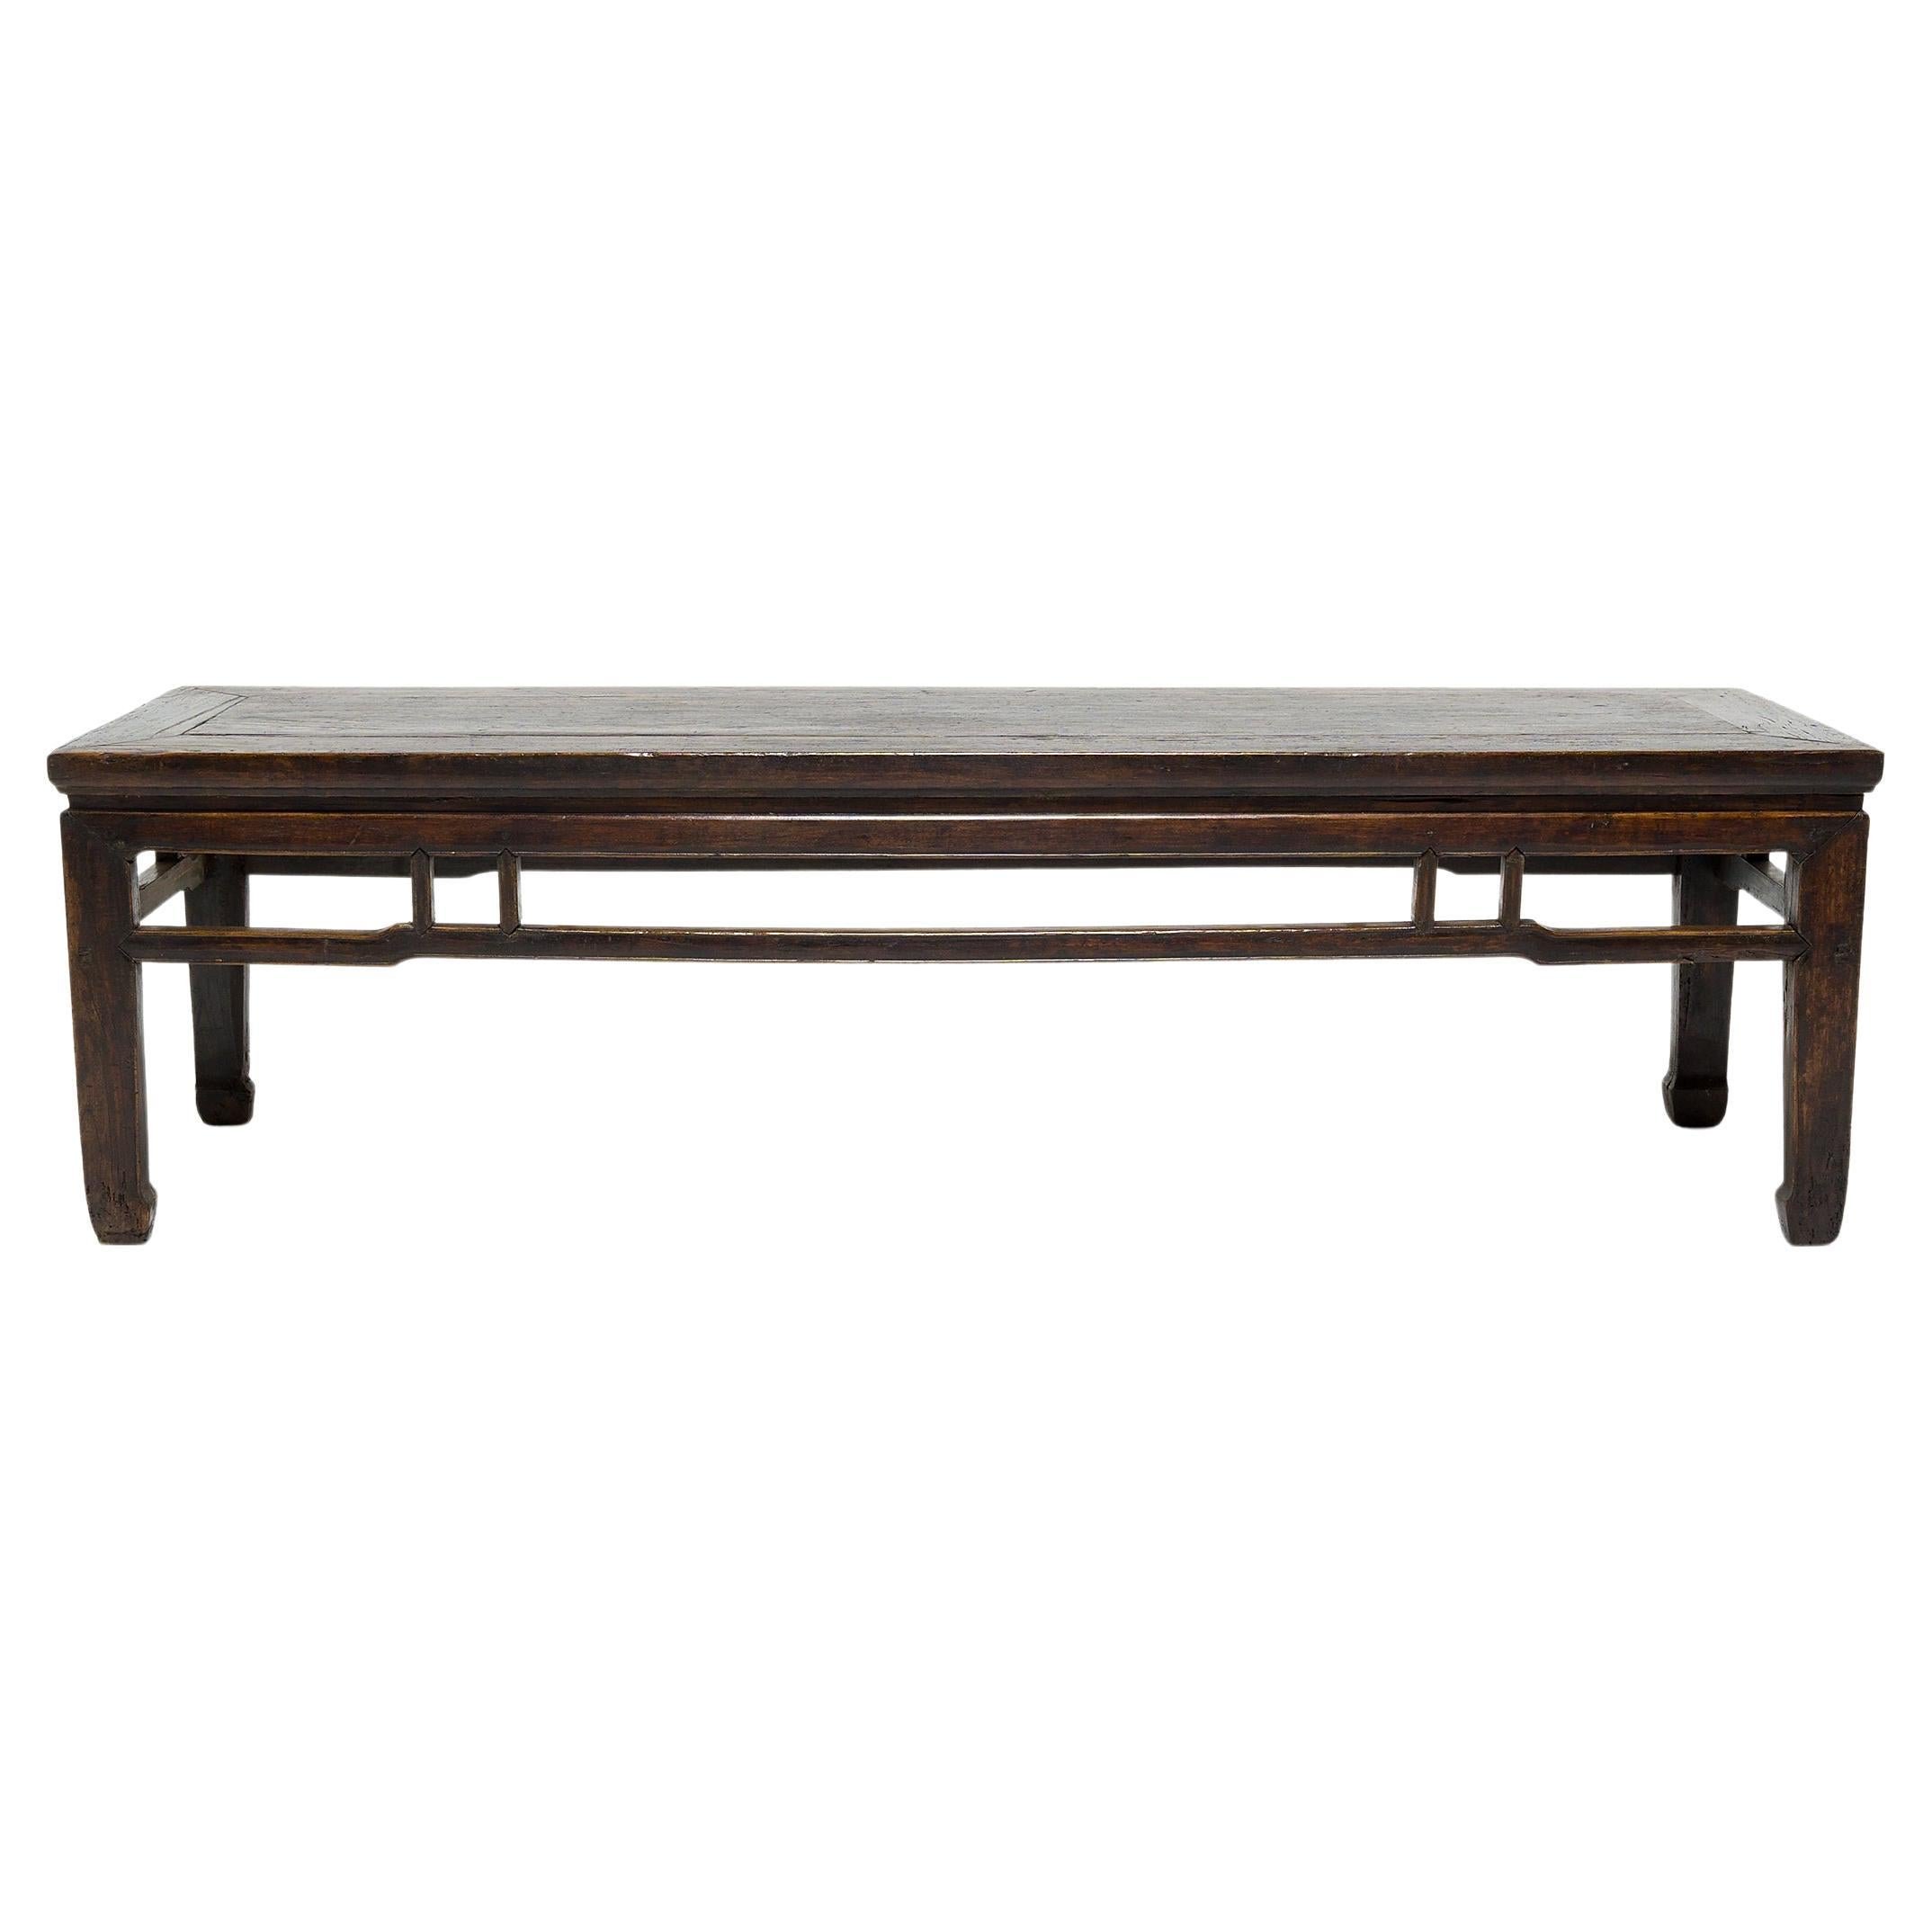 Chinese Low Kang Table, circa 1800